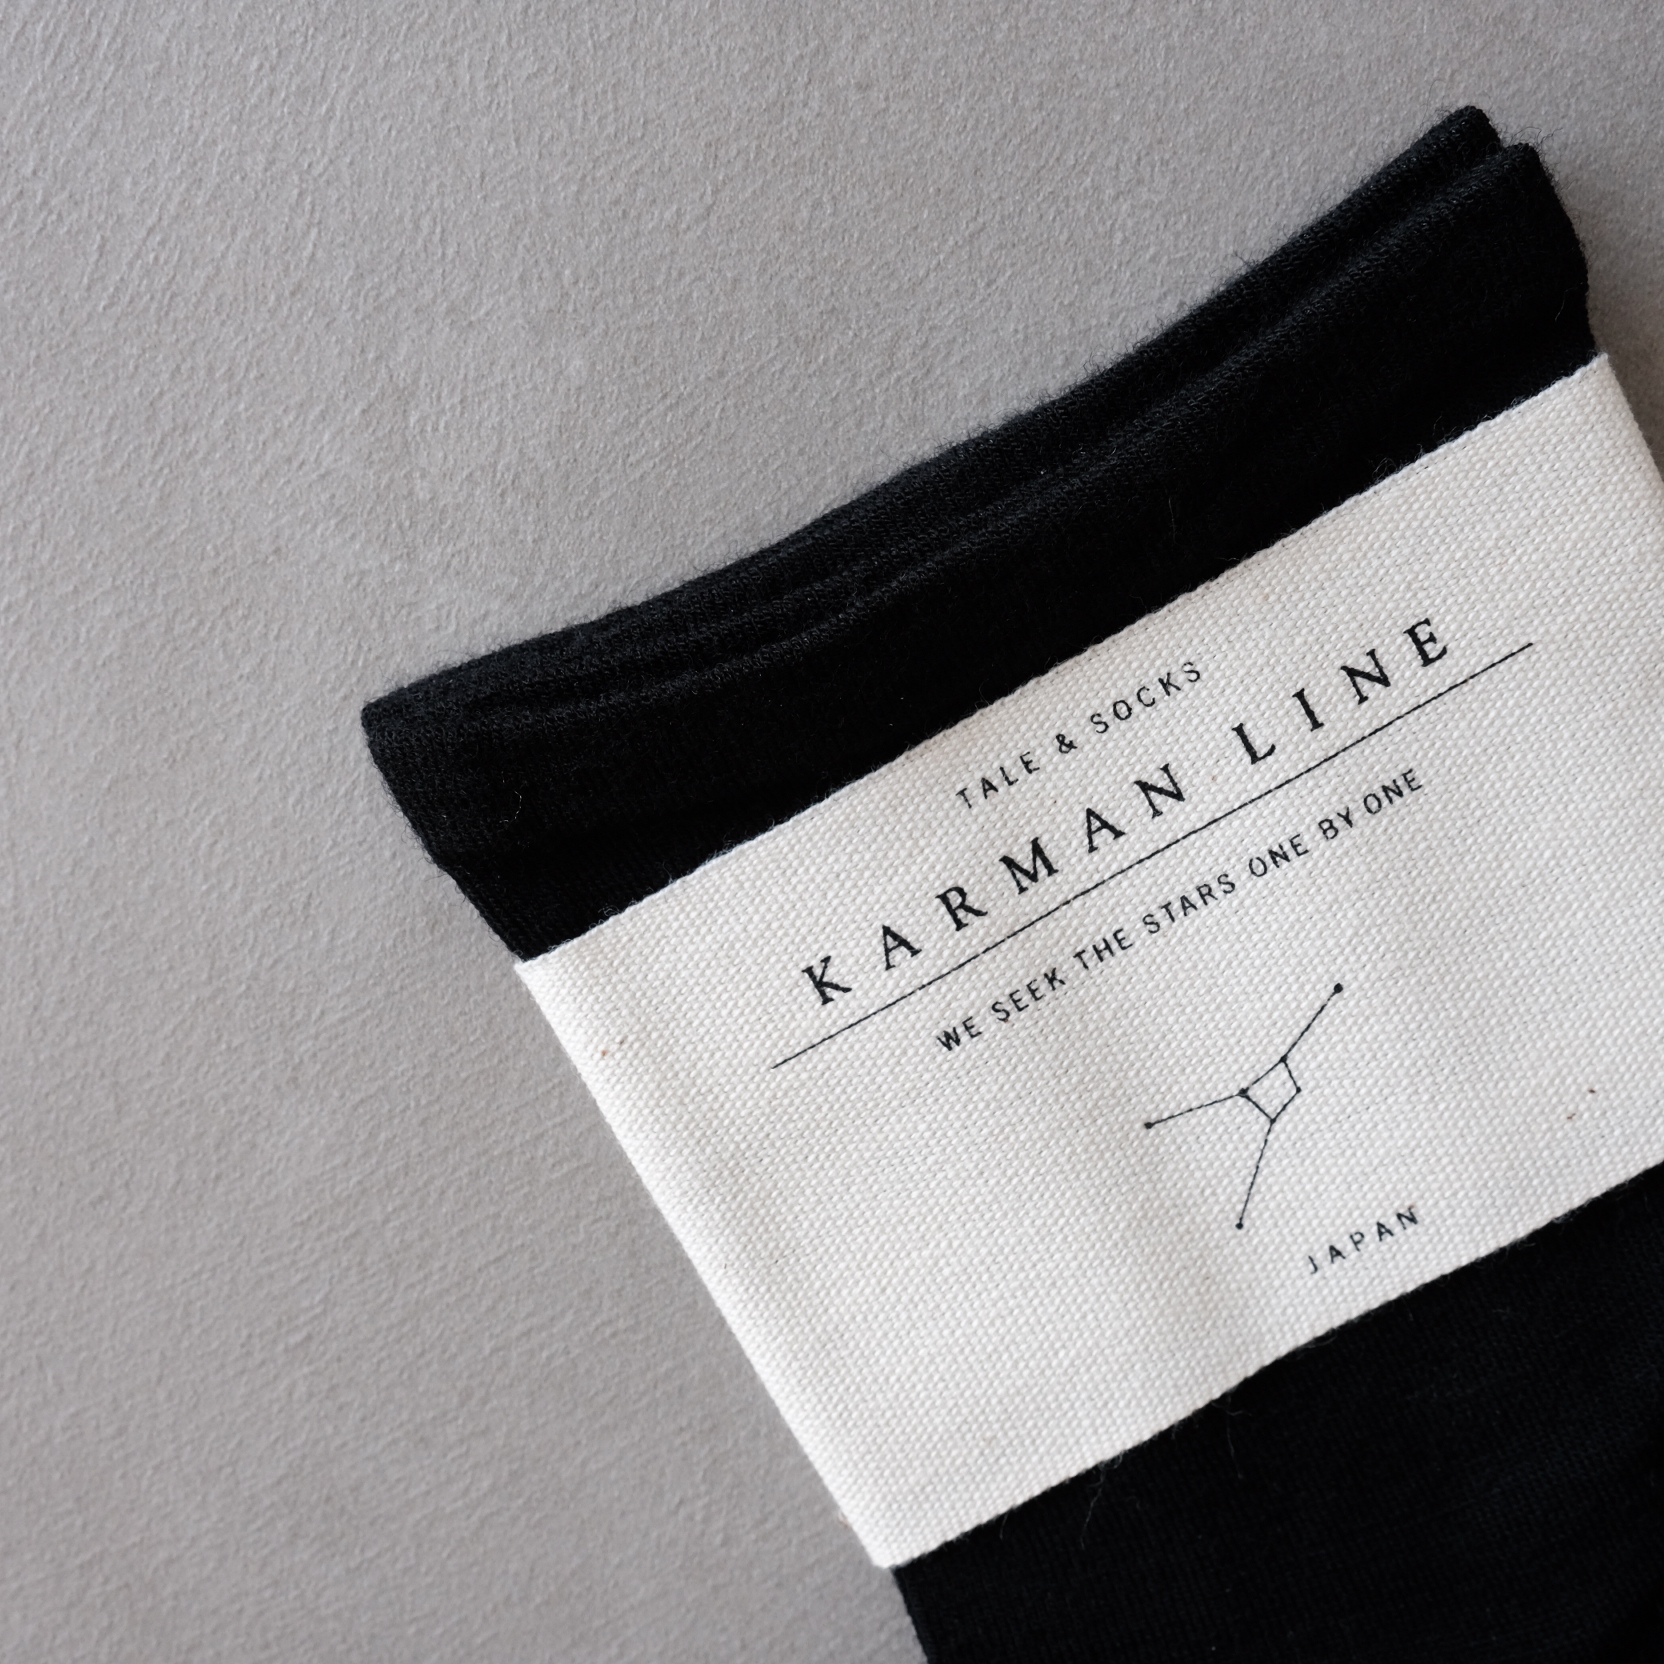 KARMAN LINE CANCER / socks / Black